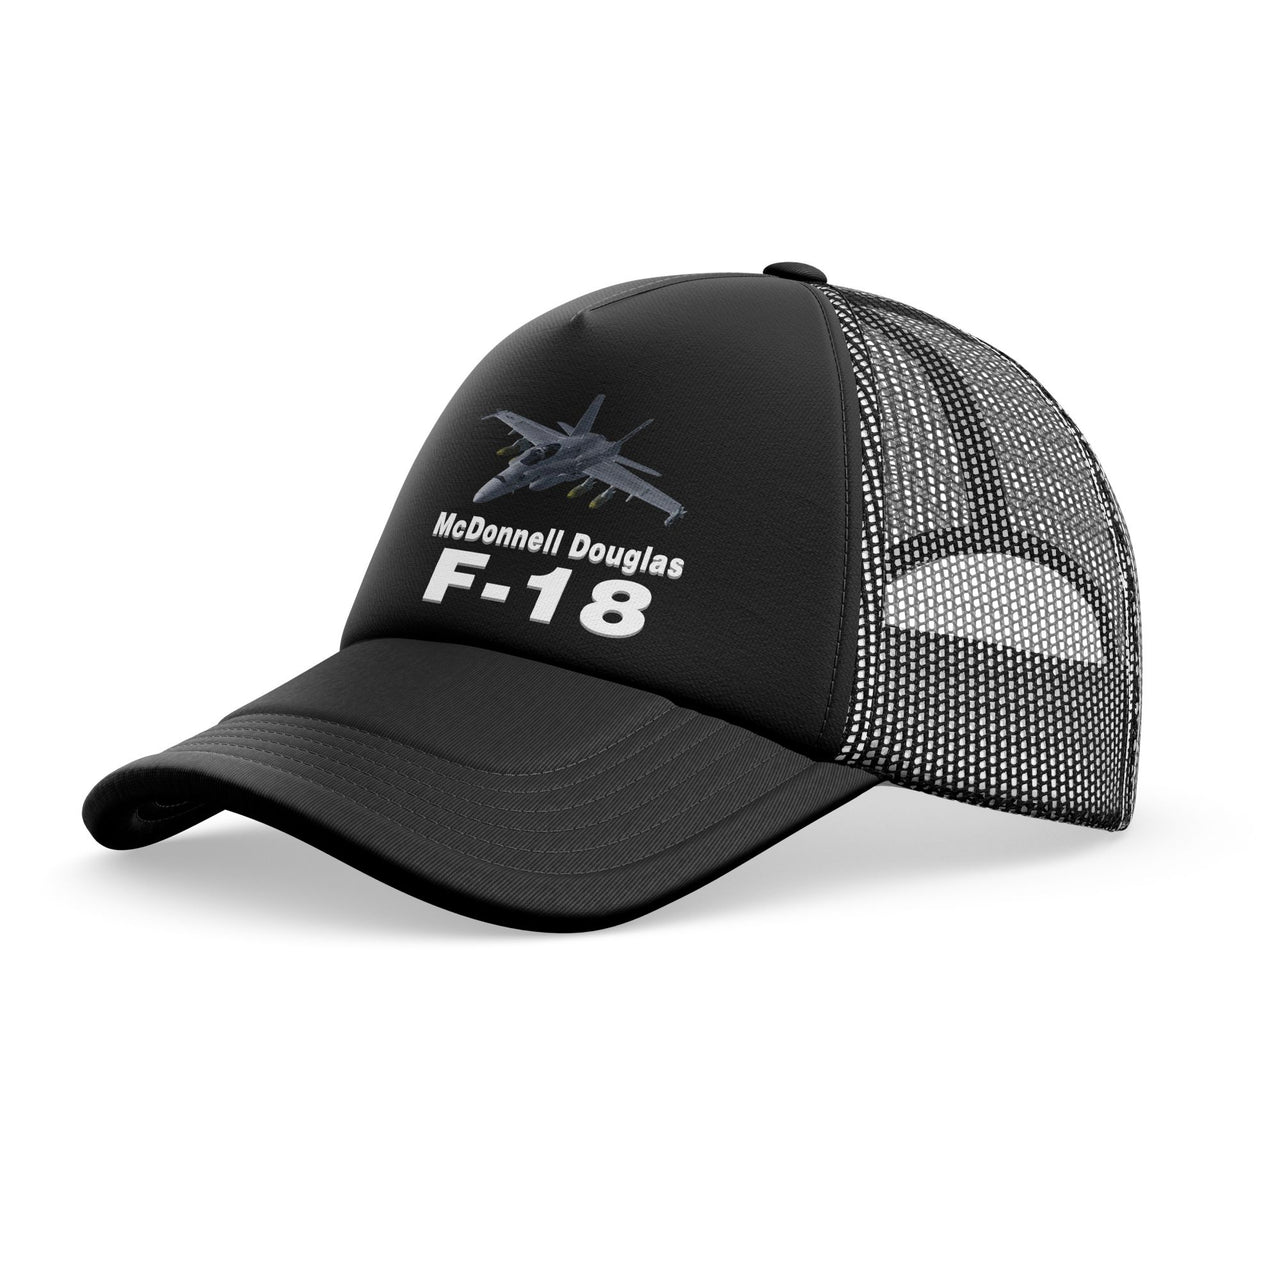 The McDonnell Douglas F18 Designed Trucker Caps & Hats